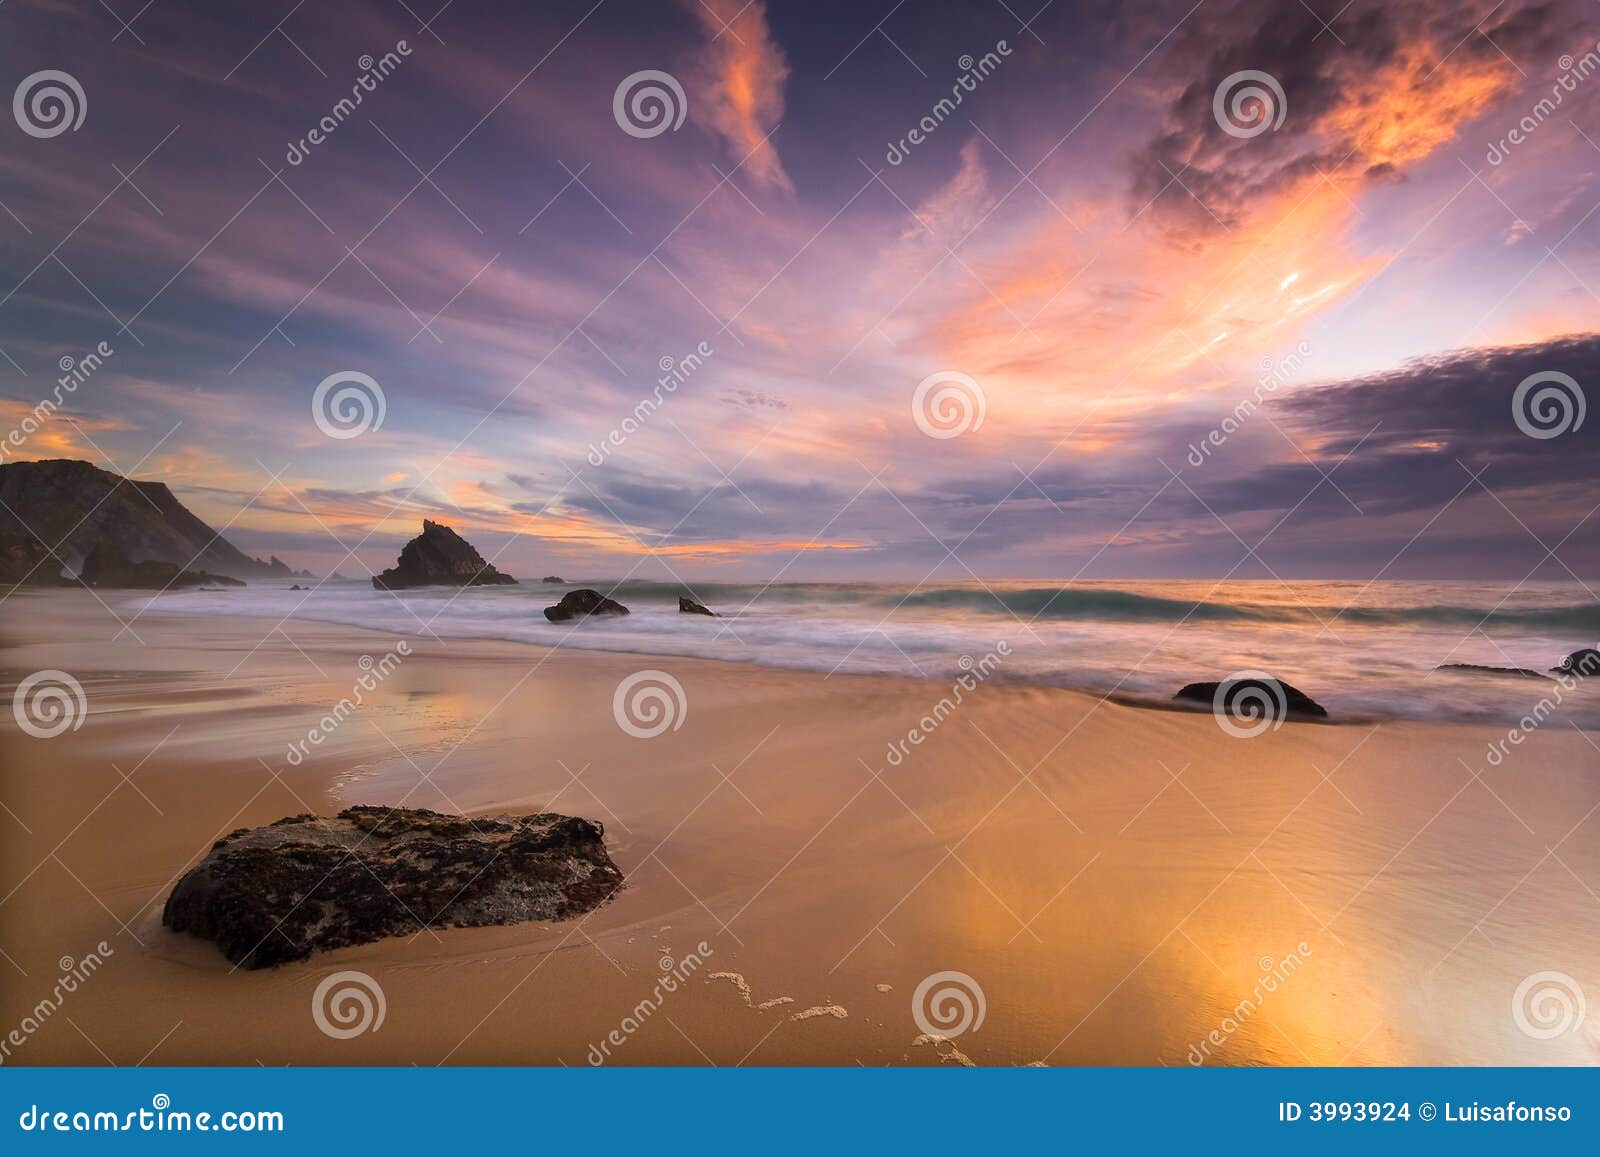 adraga beach at sunset